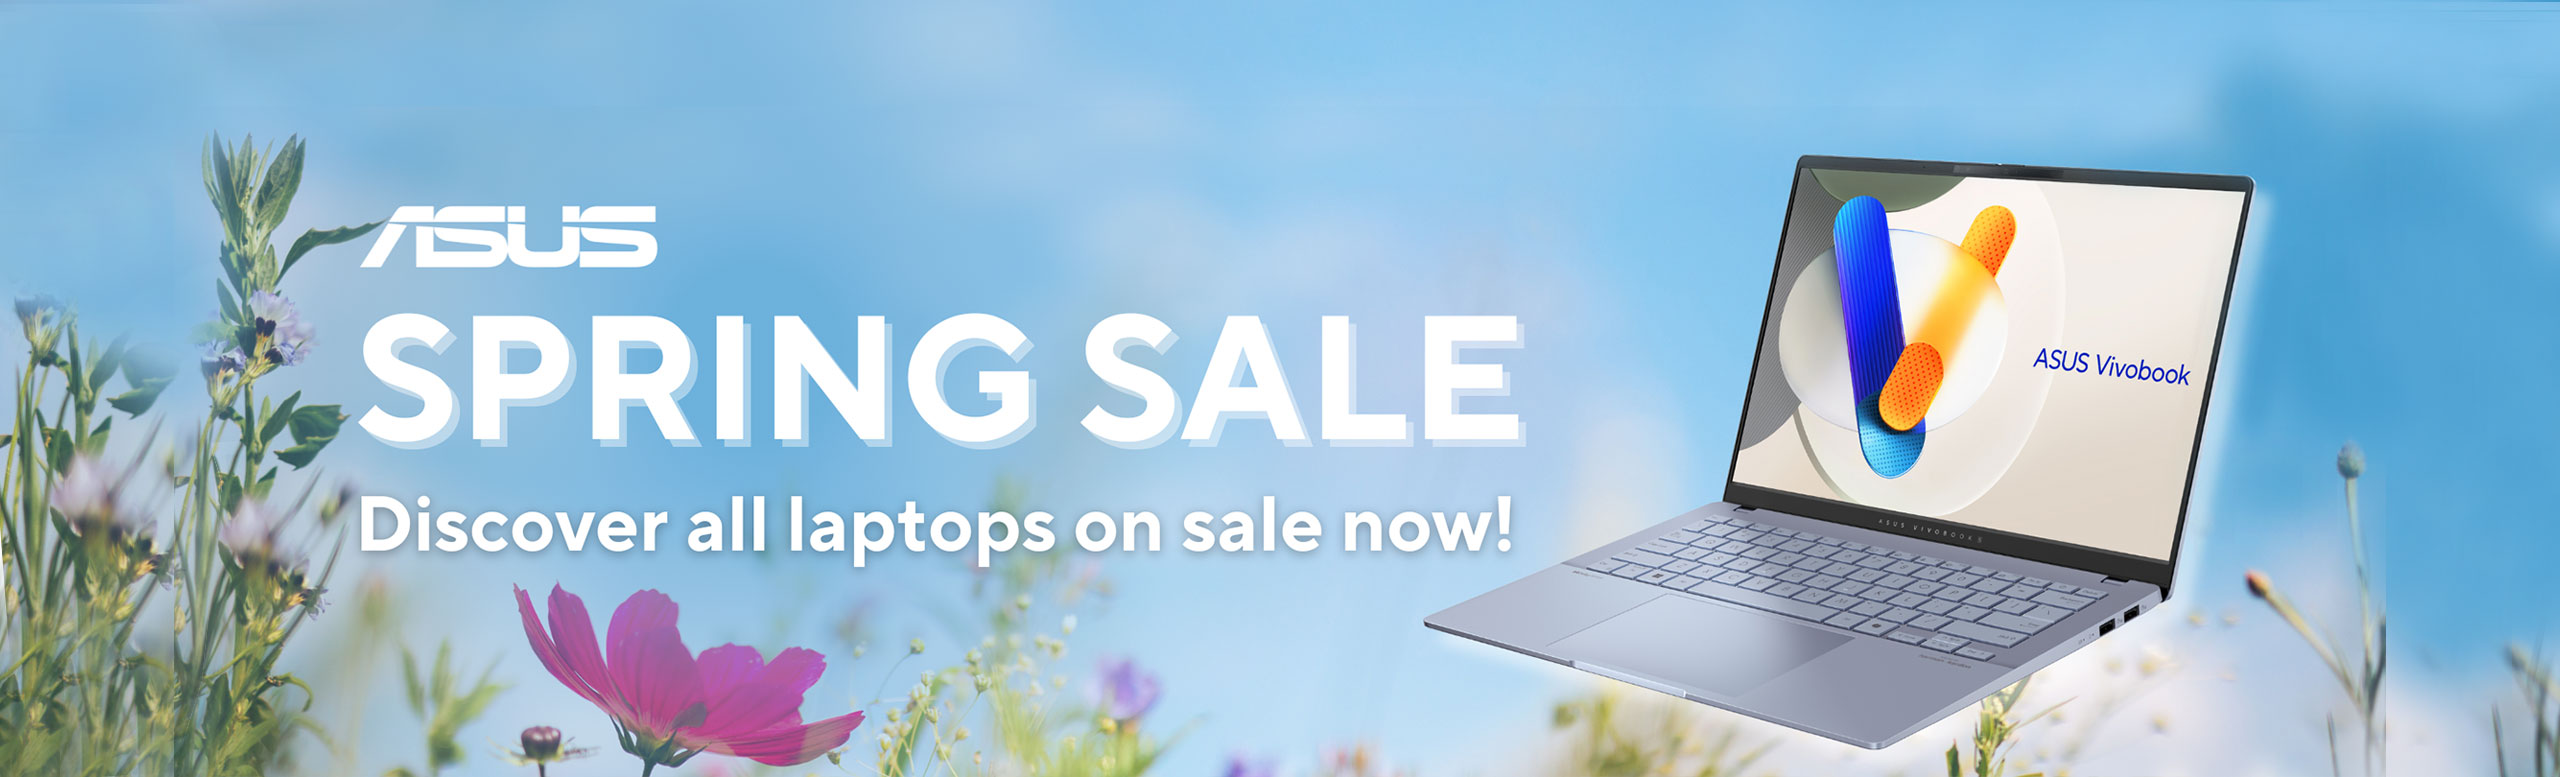 Spring Promo Alert: Unbeatable Deals on ASUS Laptops!